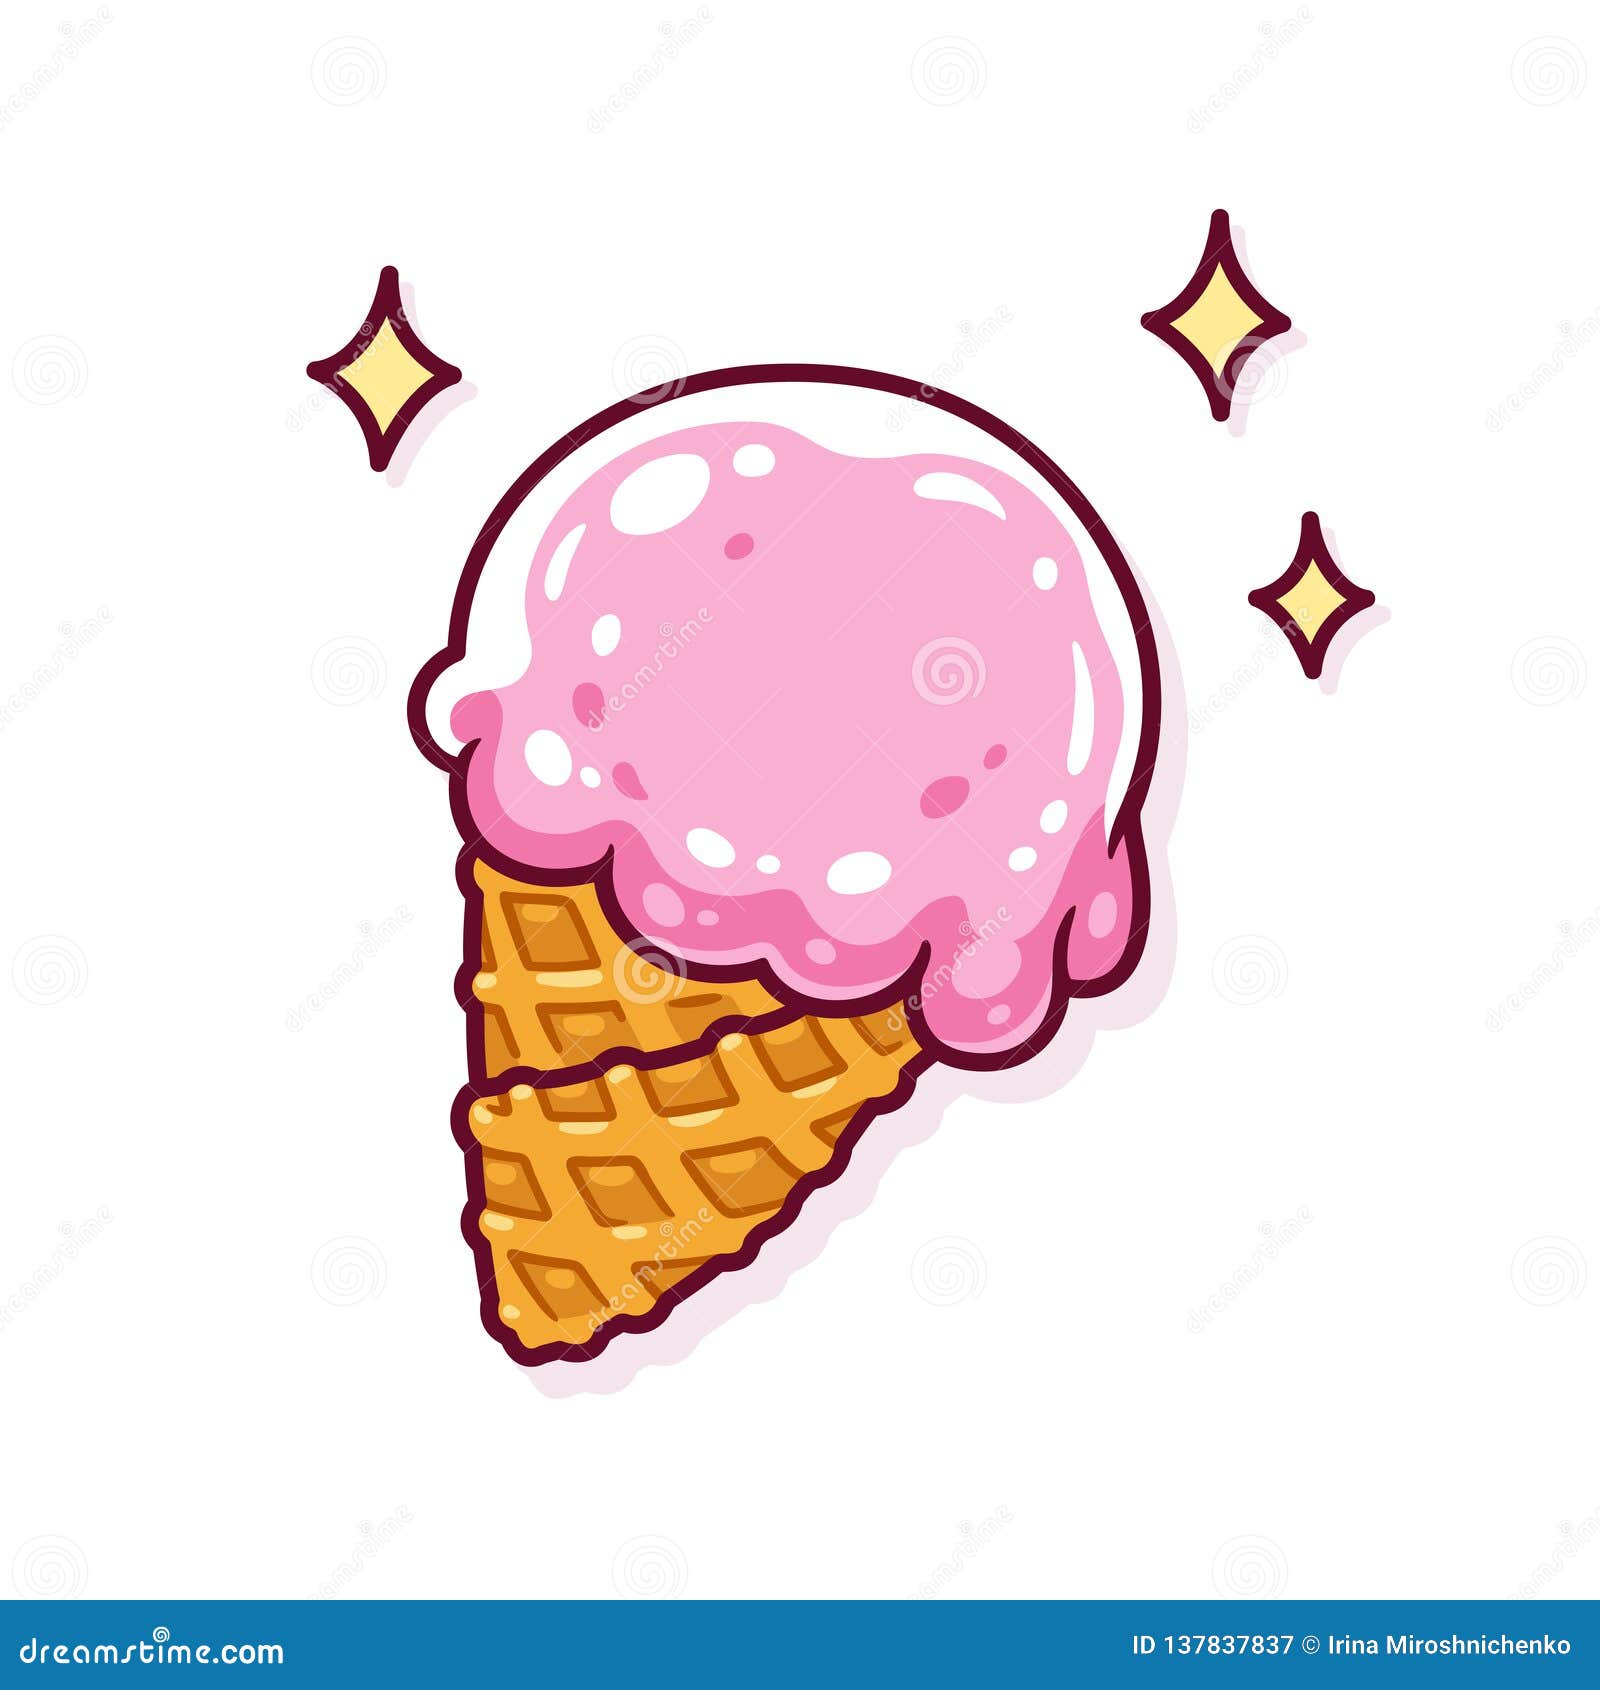 Cartoon ice cream cone stock vector. Illustration of dessert - 137837837